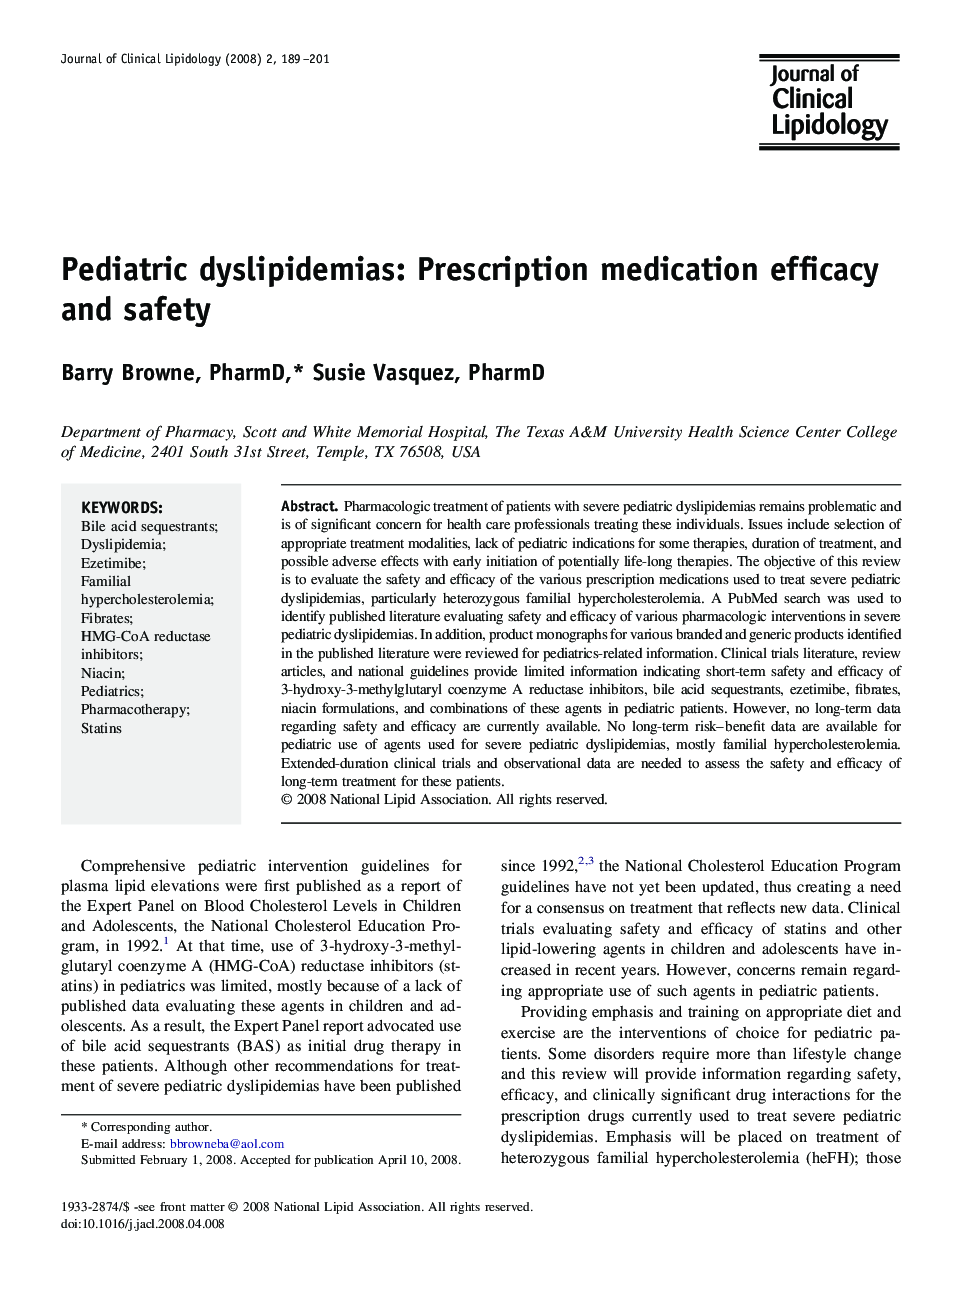 Pediatric dyslipidemias: Prescription medication efficacy and safety